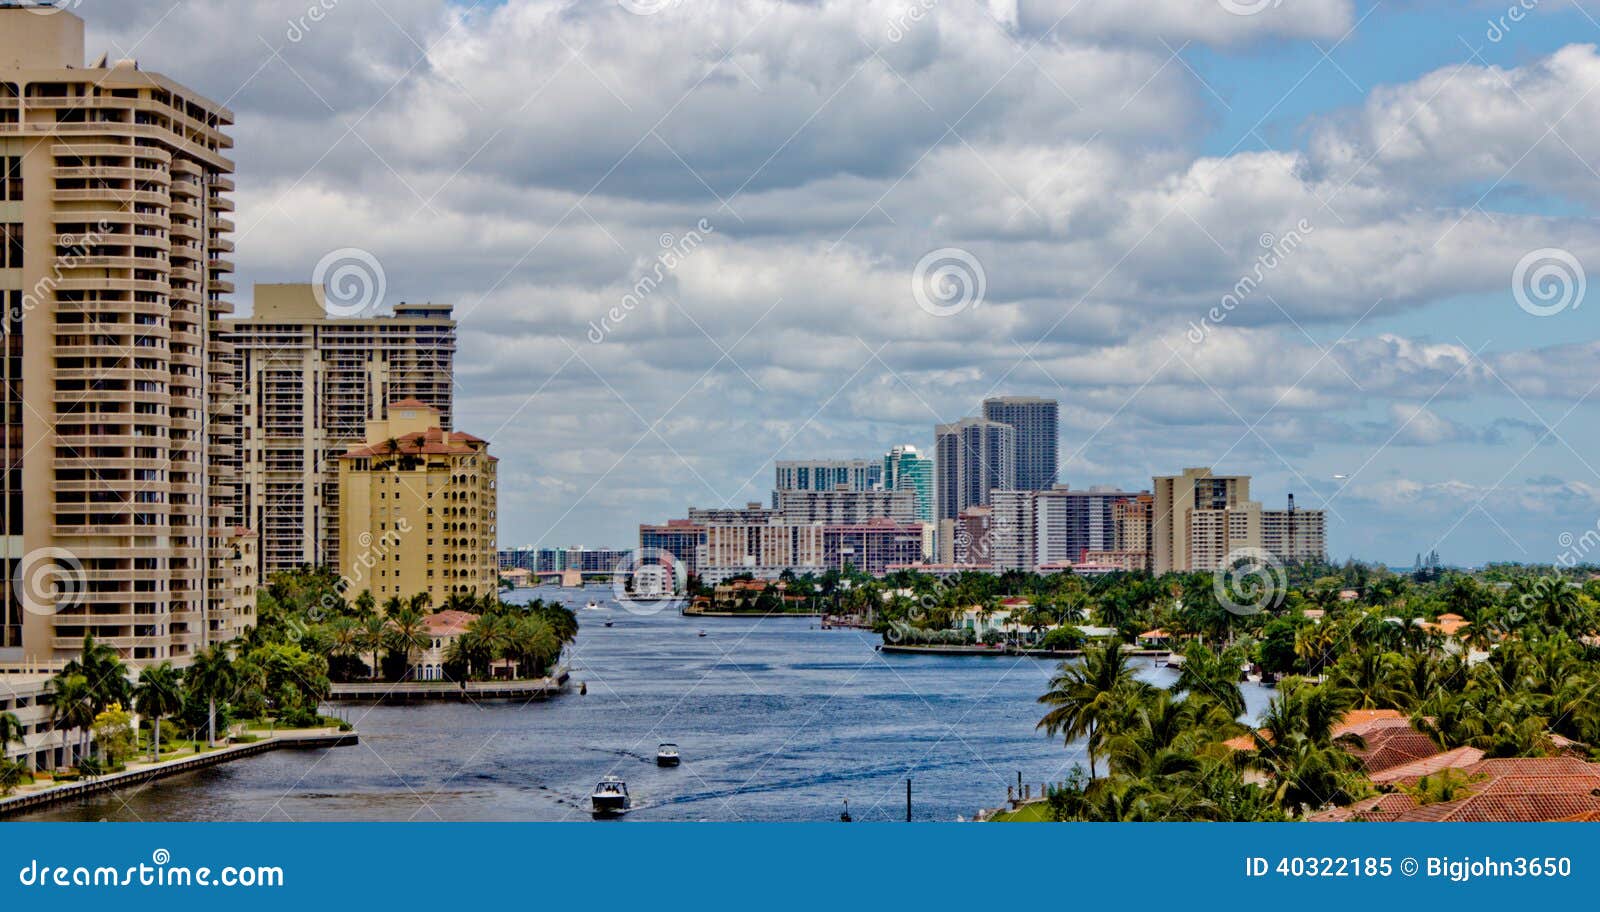 The Intercoastal Waterway in Miami, Florida. Stock Image - Image of ...